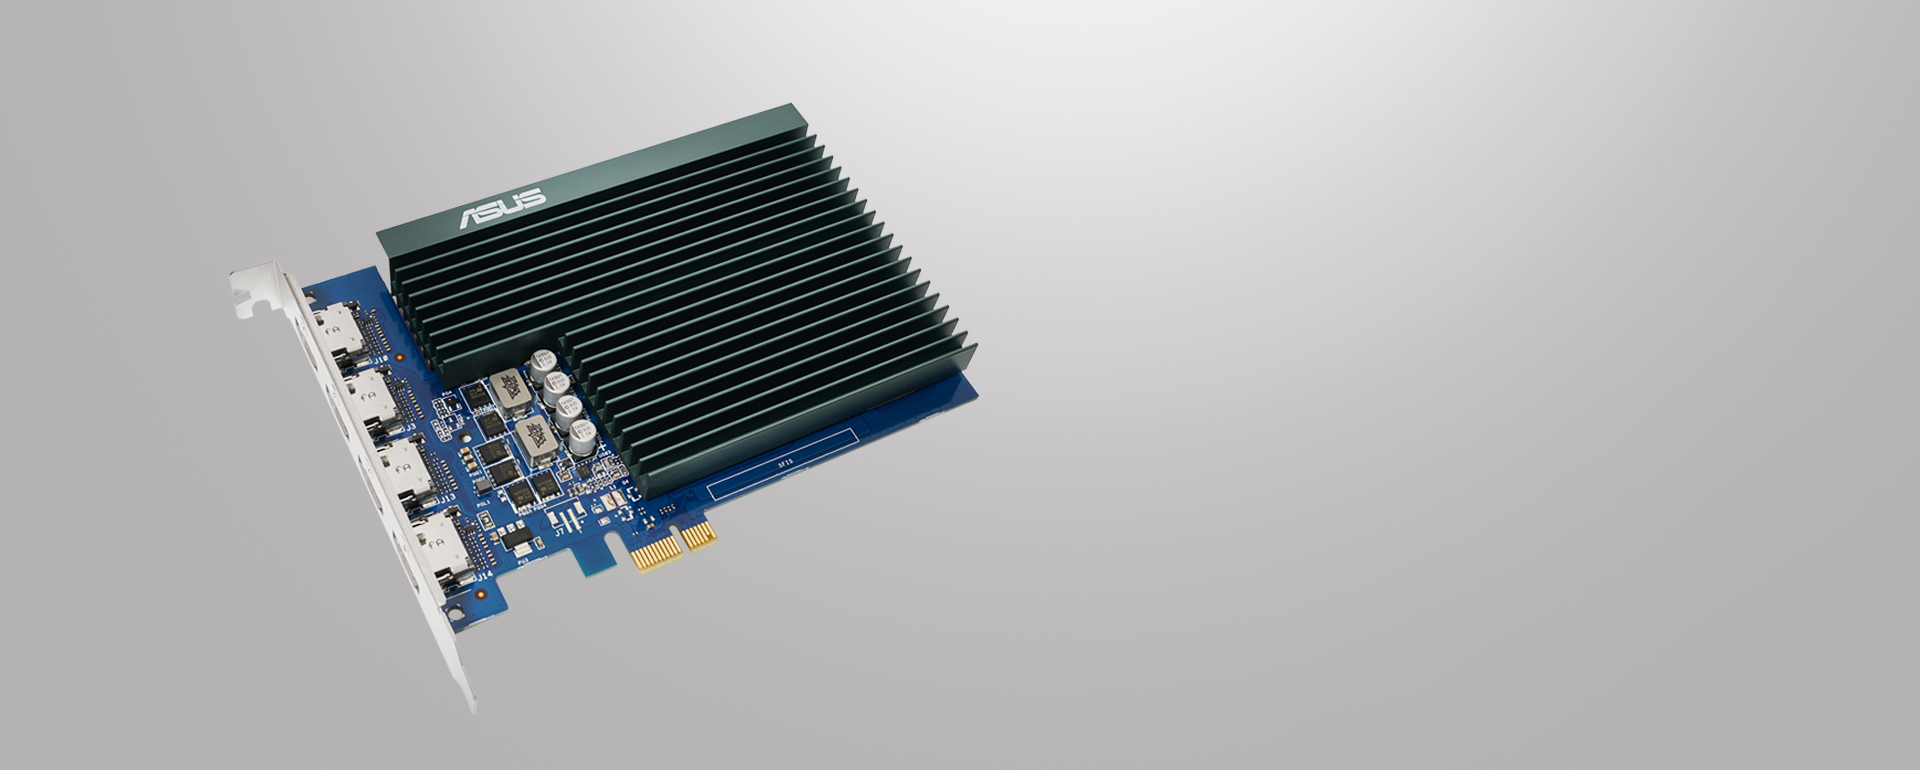 ASUS GeForce GT 730 Video Card for Silent HTPC Builds (with I/O Port  Brackets) GT730-SL-2GD5-BRK 